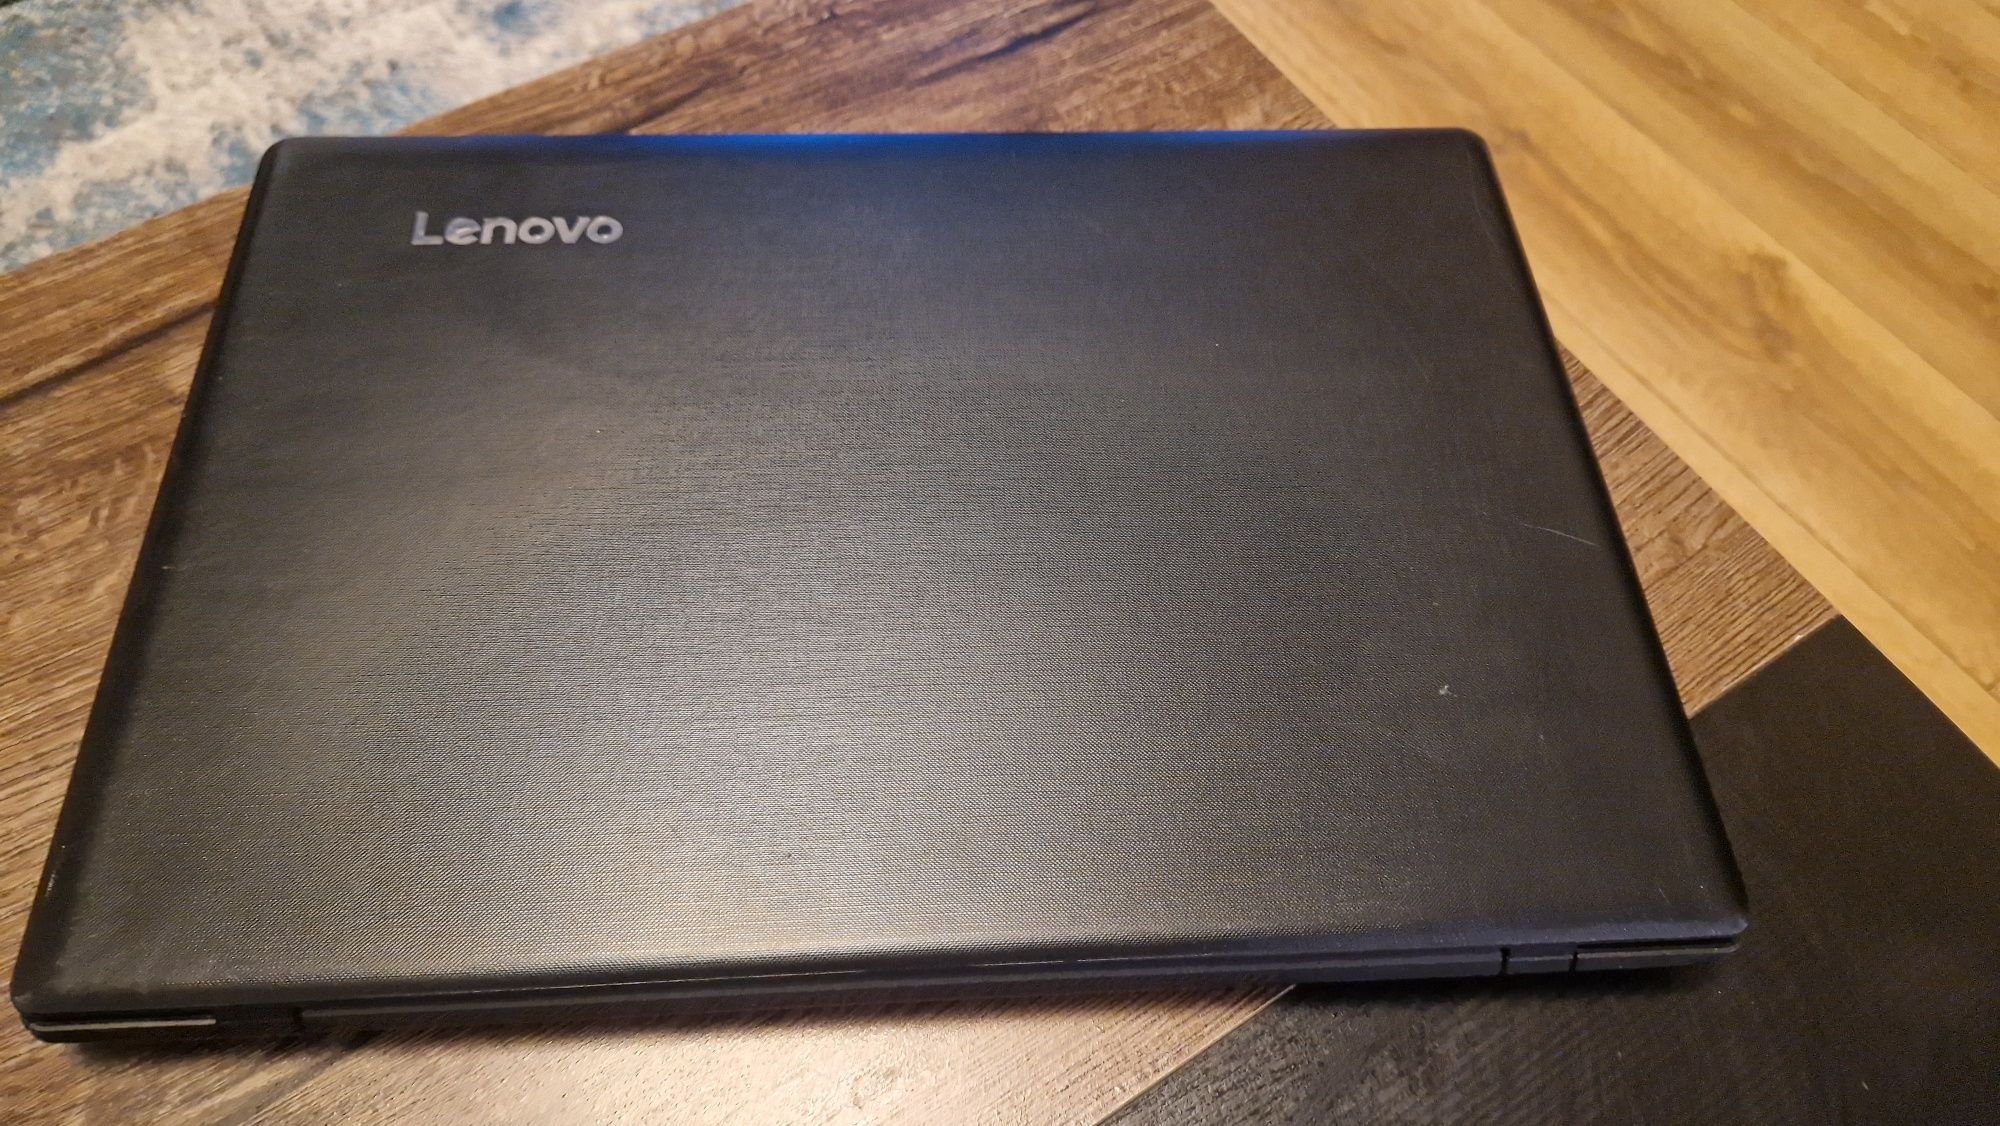 Laptop Lenovo ideapad 110-15IBR model 80T7